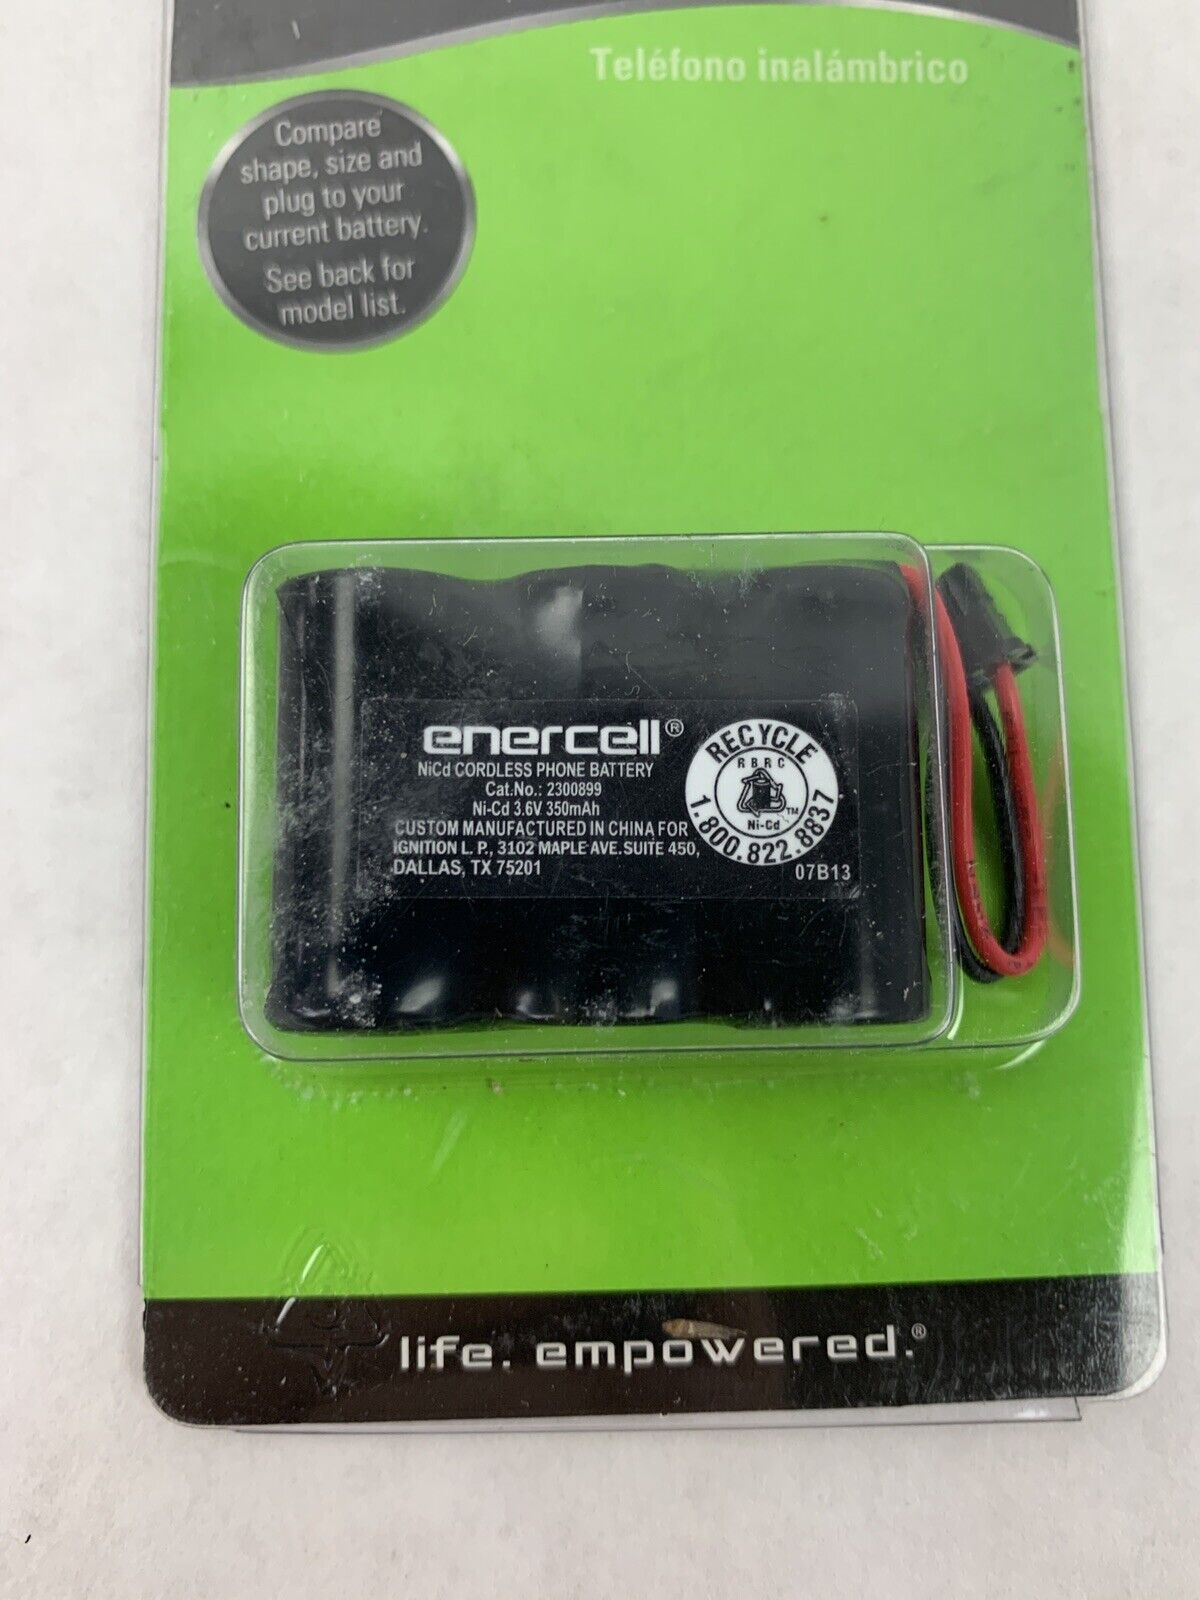 New Enercell Cordless Phone Battery 350mAh 2300899